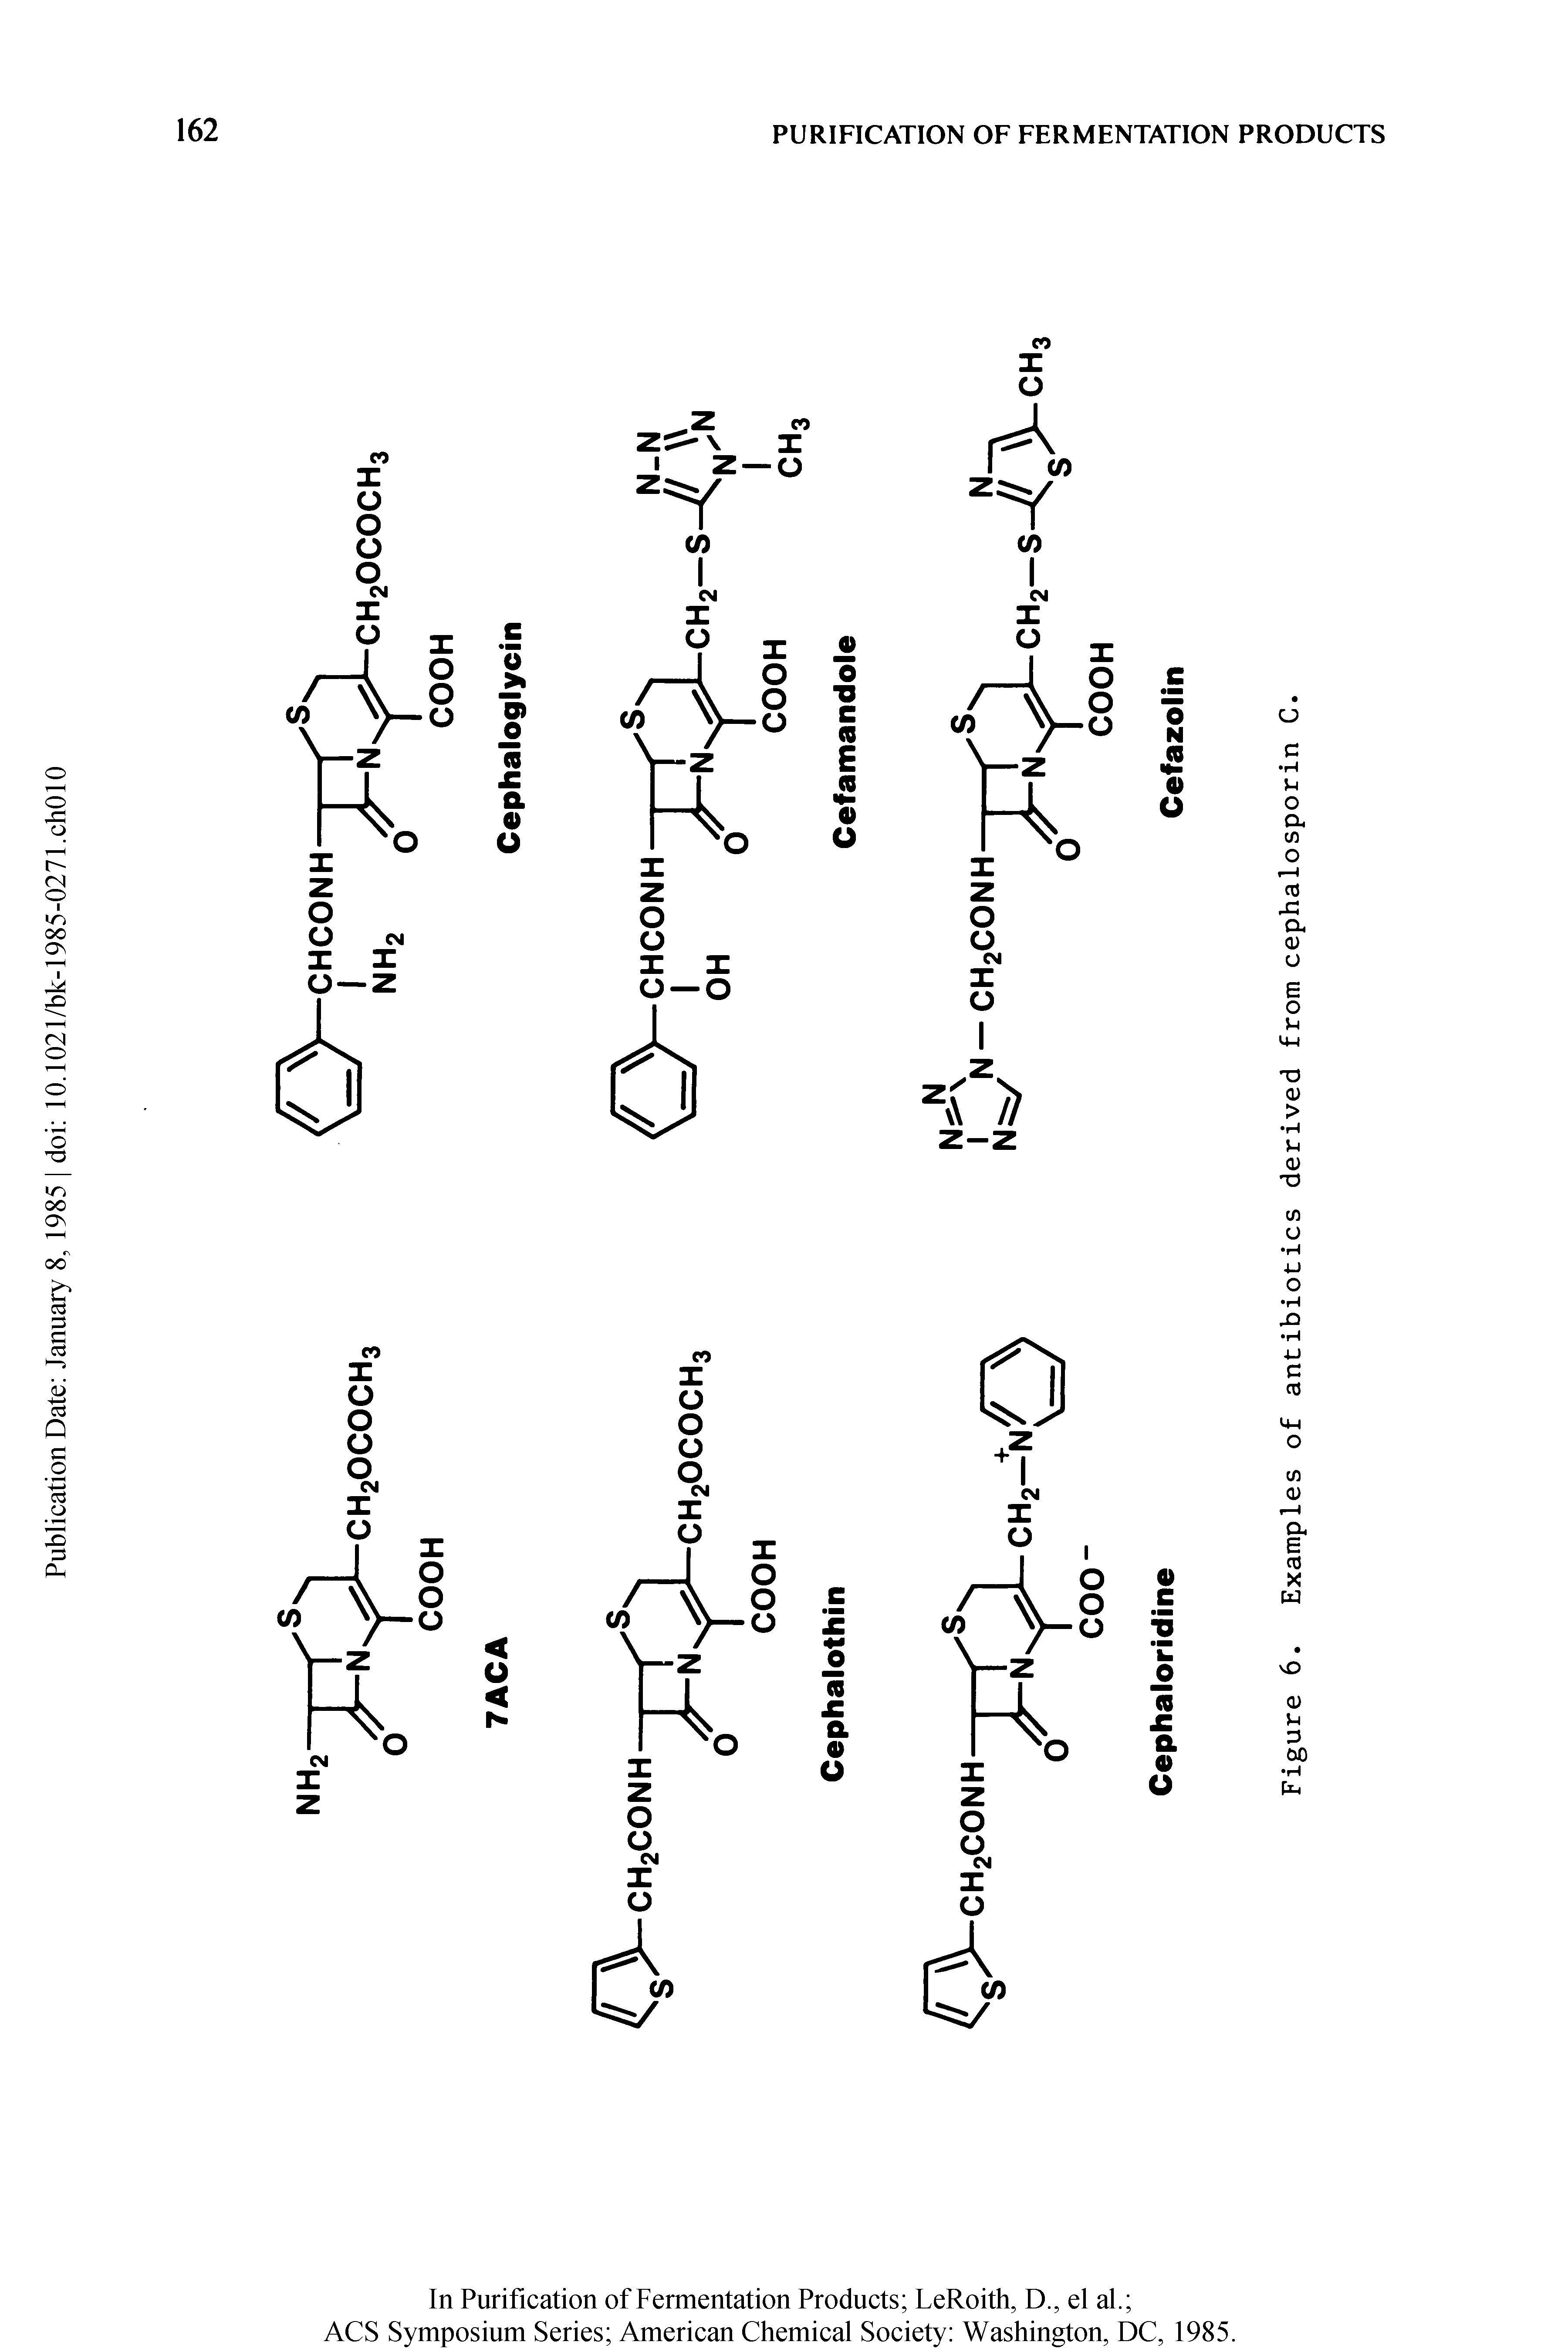 Figure 6. Examples of antibiotics derived from cephalosporin...